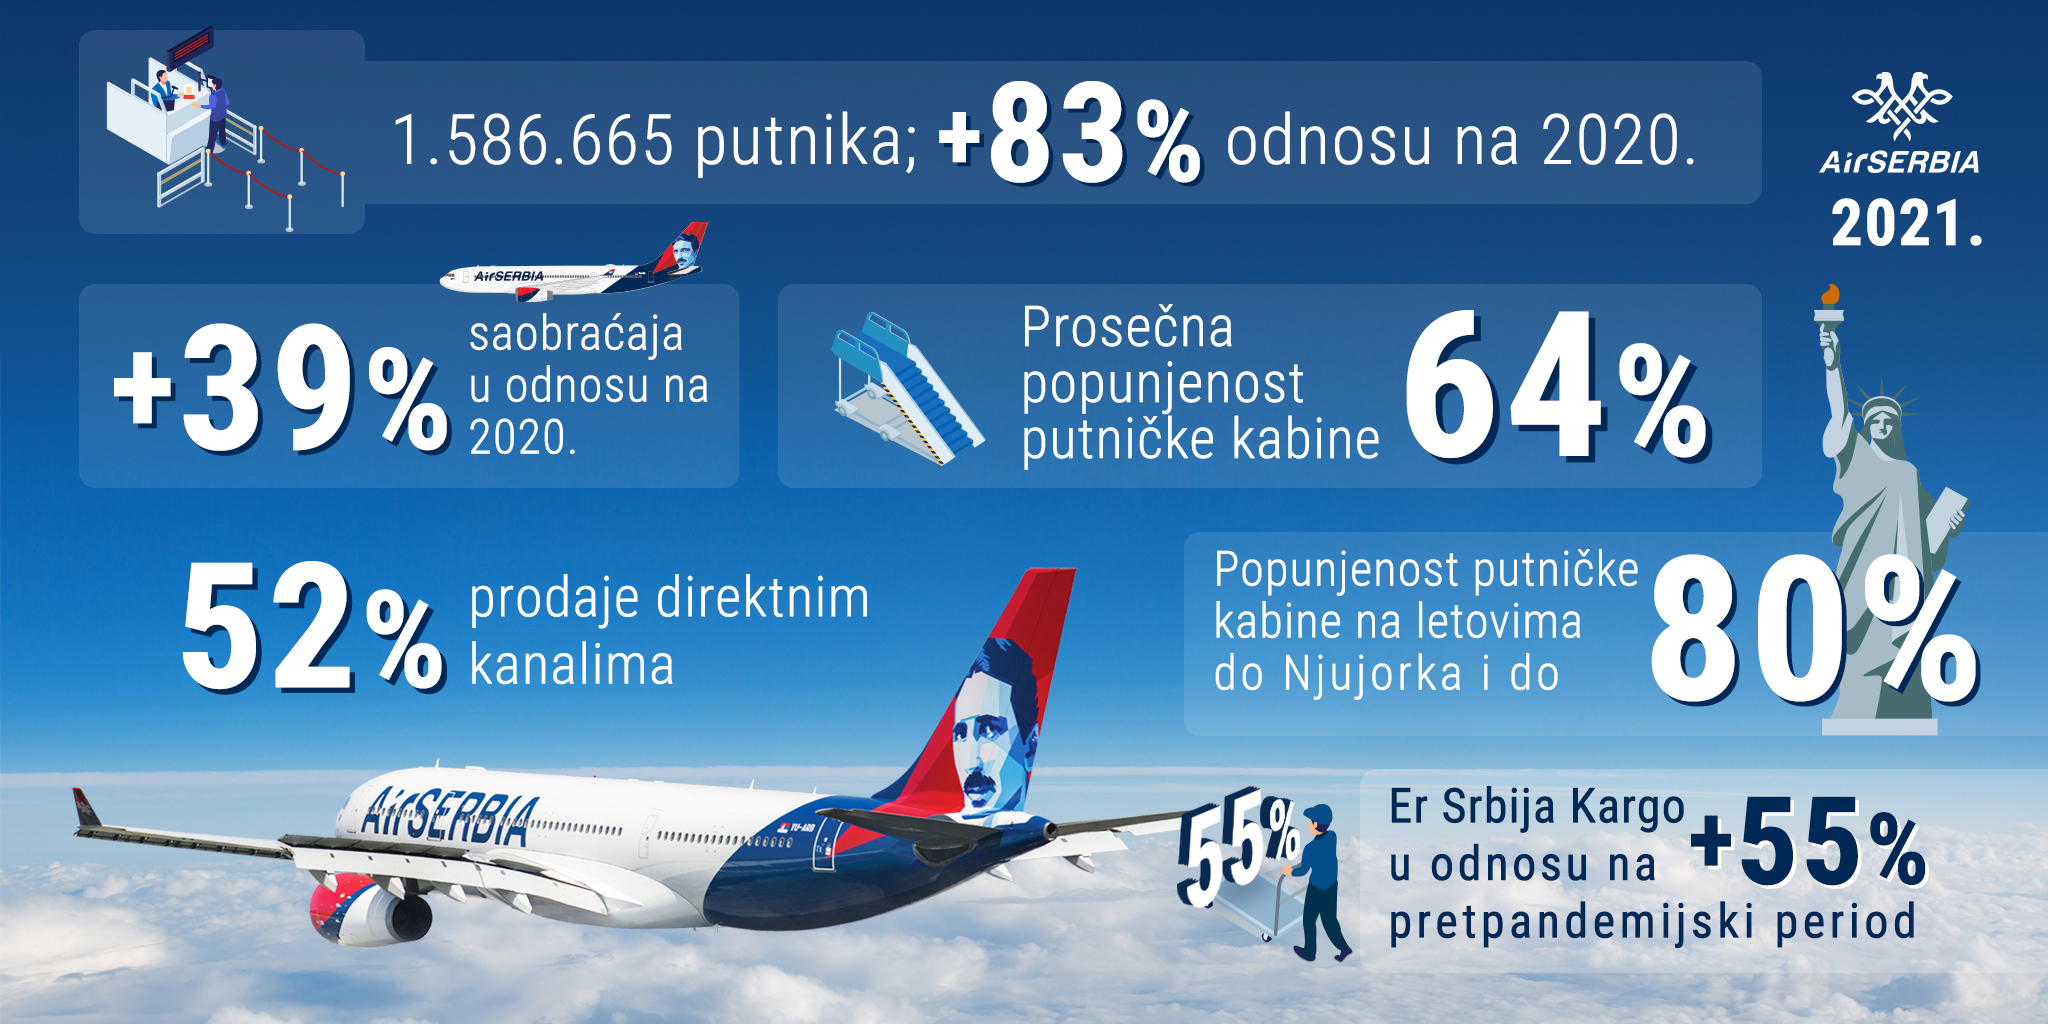 Купить авиабилет эйр сербия. Air Serbia самолеты. Авиабилеты в Сербию Air Serbia 2022. Представительство Air Serbia Россия. Air Serbia телефон.